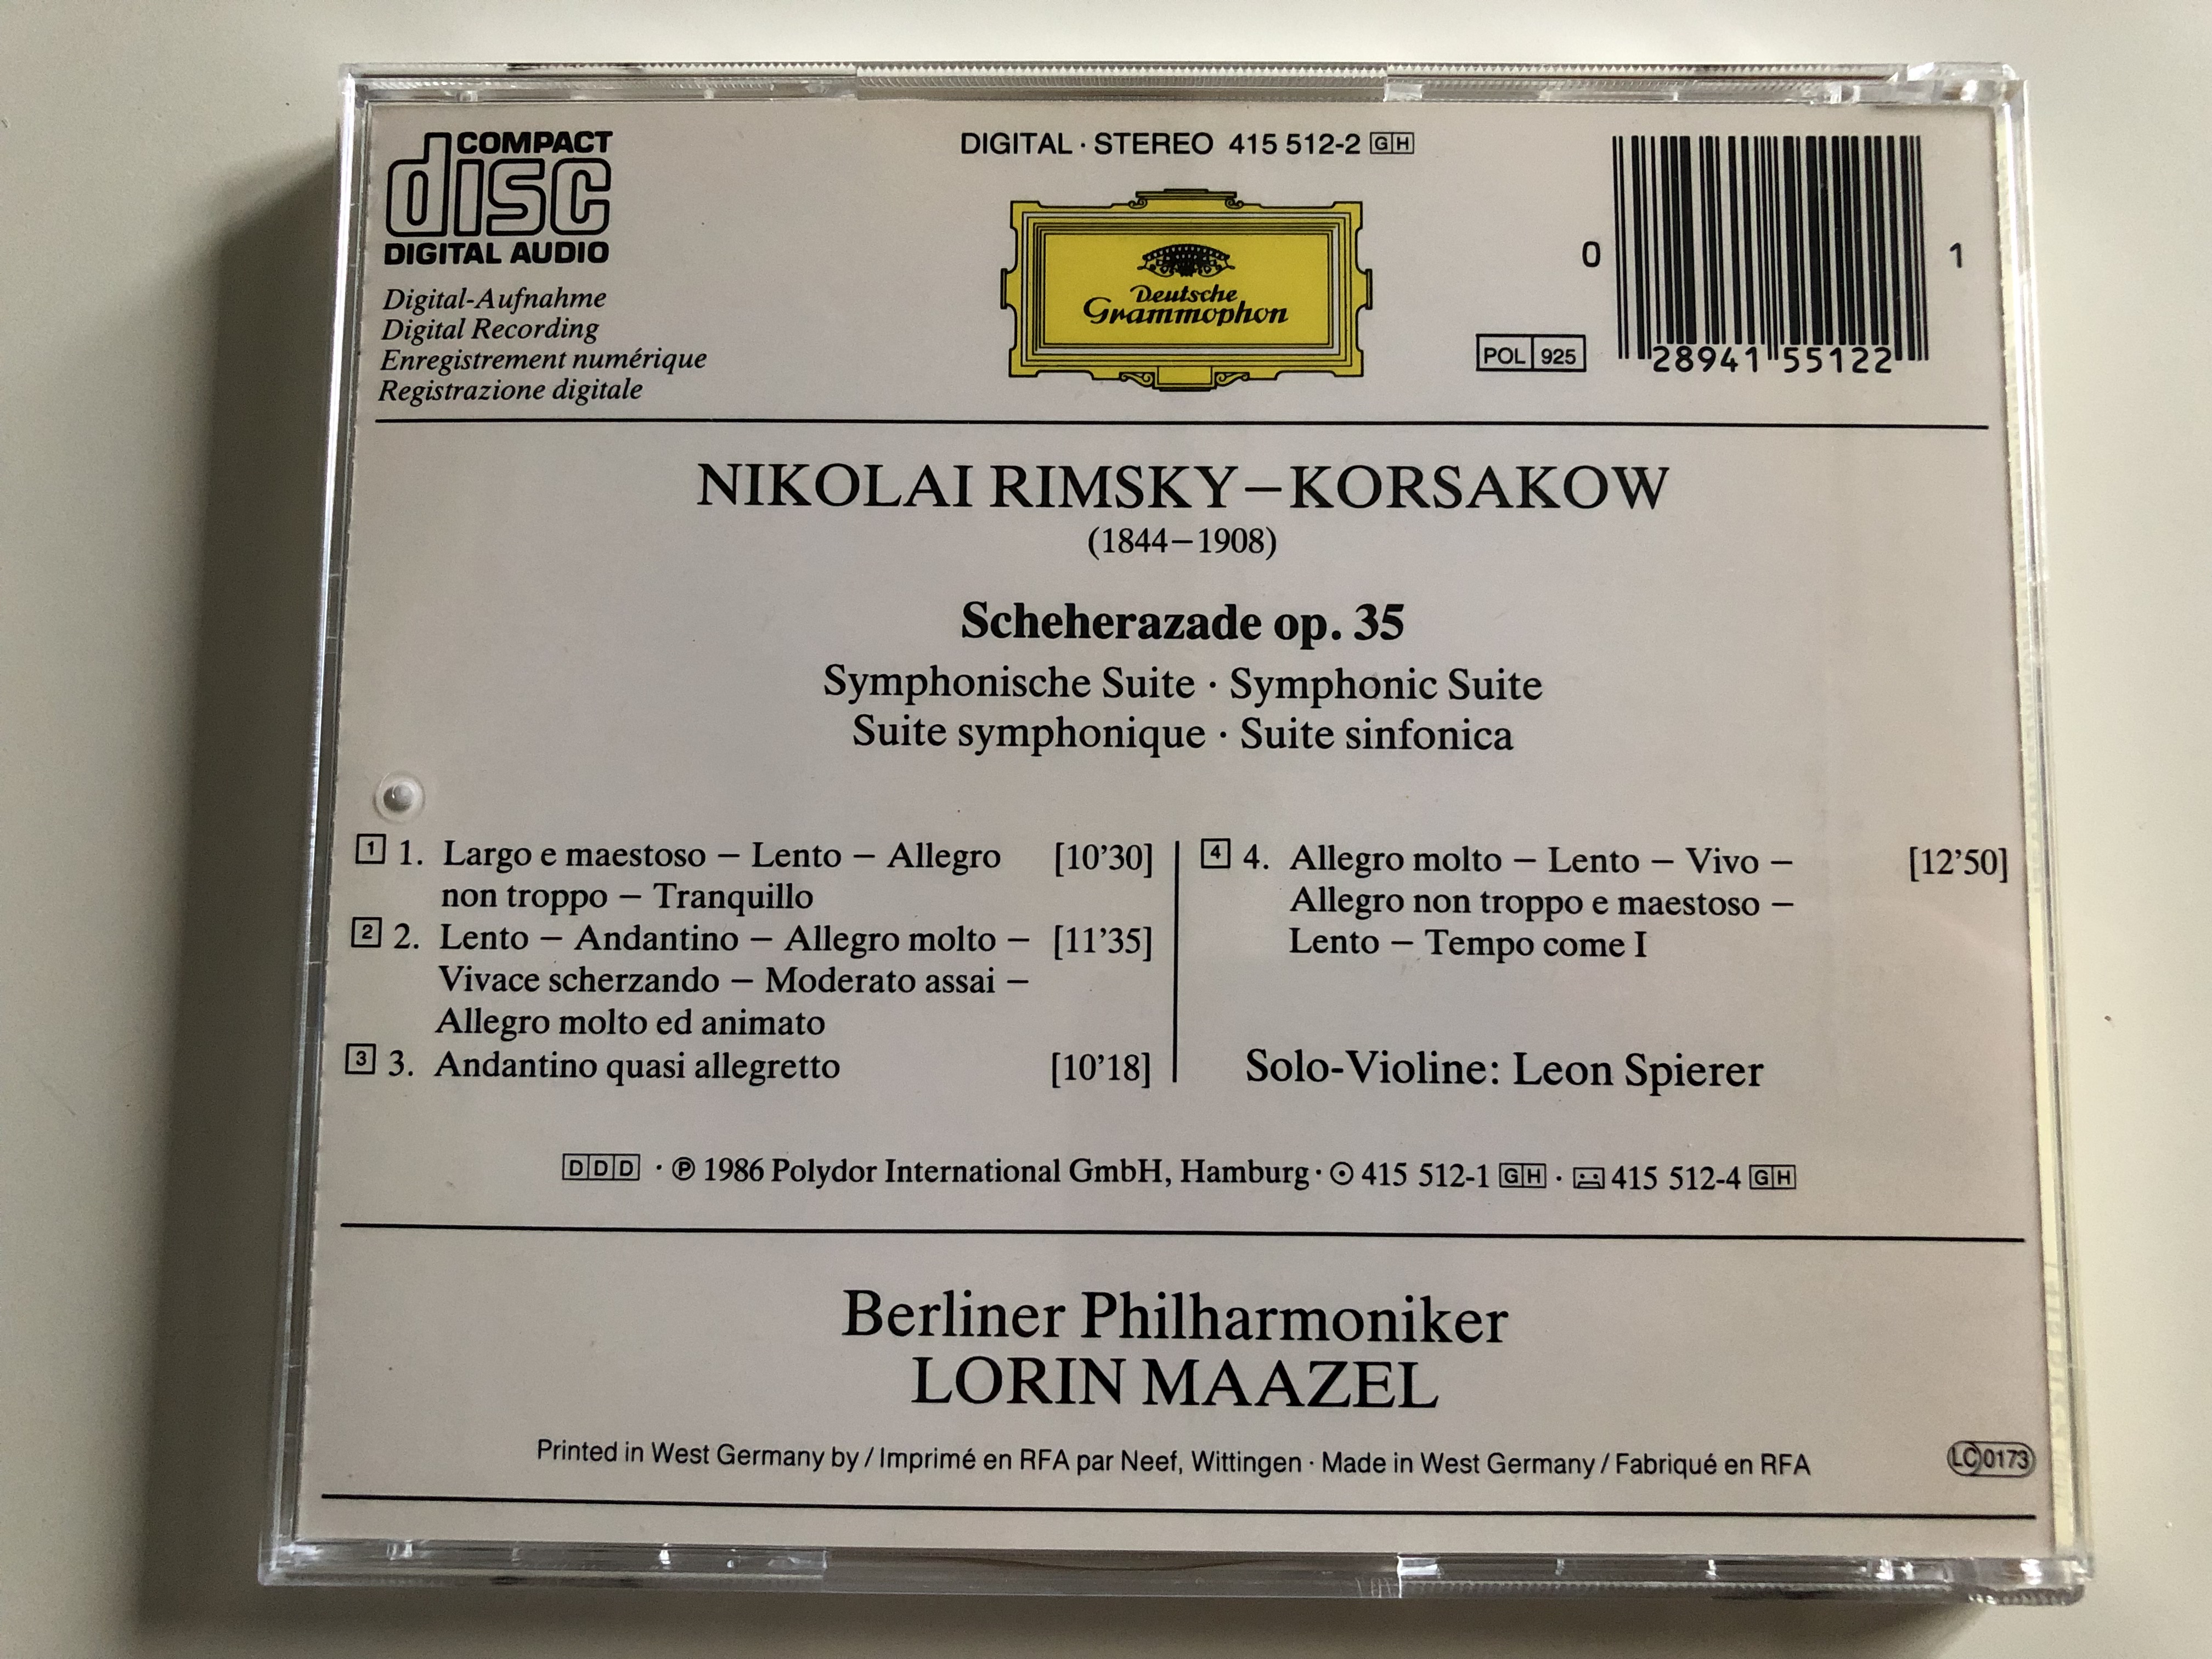 nikolai-rimsky-korsakow-scheherazade-op.-35-berliner-philharmoniker-conducted-by-lorin-maazel-solo-violin-leon-spierer-audio-cd-1986-8-.jpg